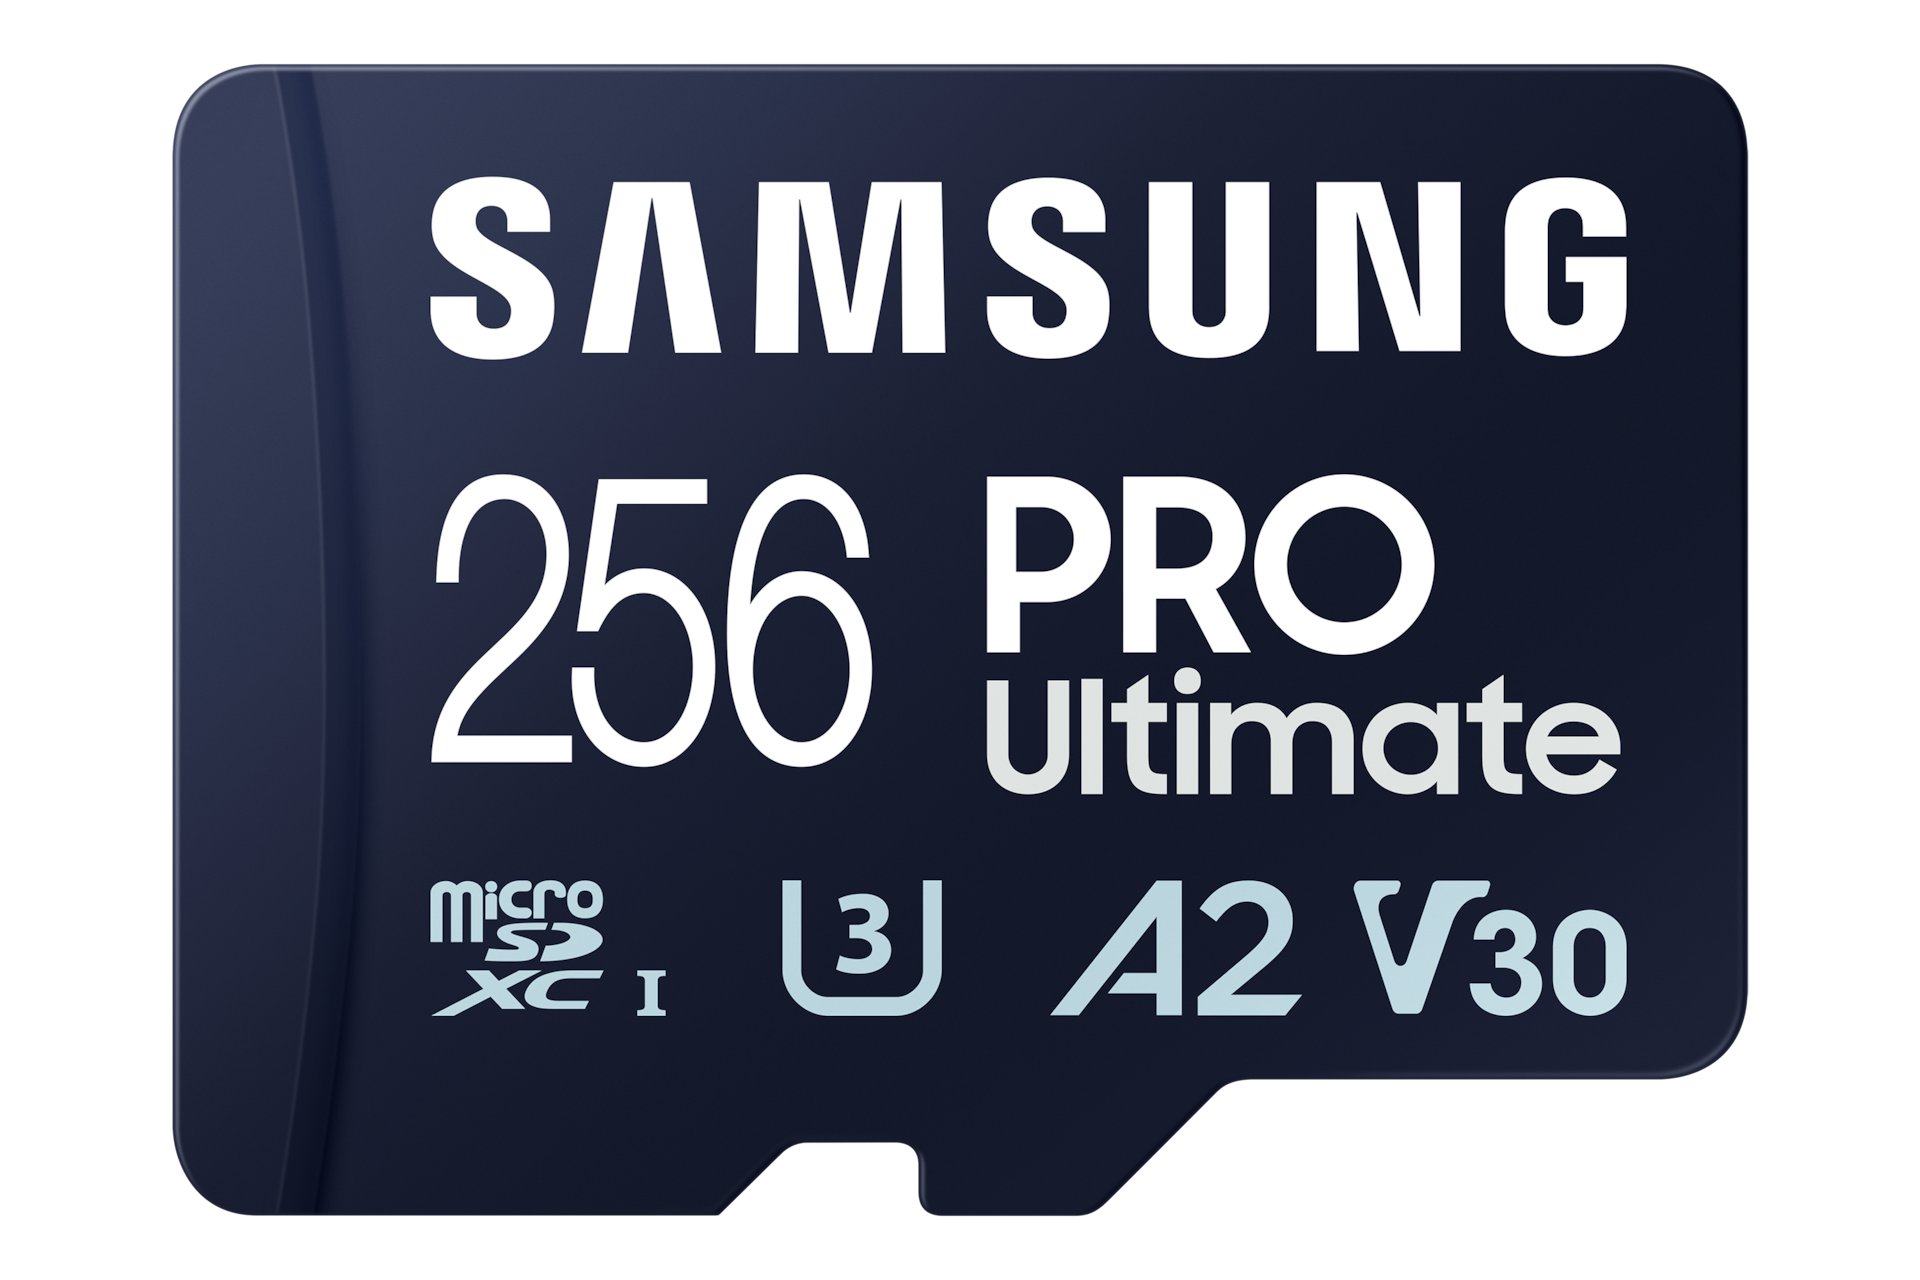 Carte microSD PRO Ultimate 256 Go avec Lecteur (MB-MY256SB/WW